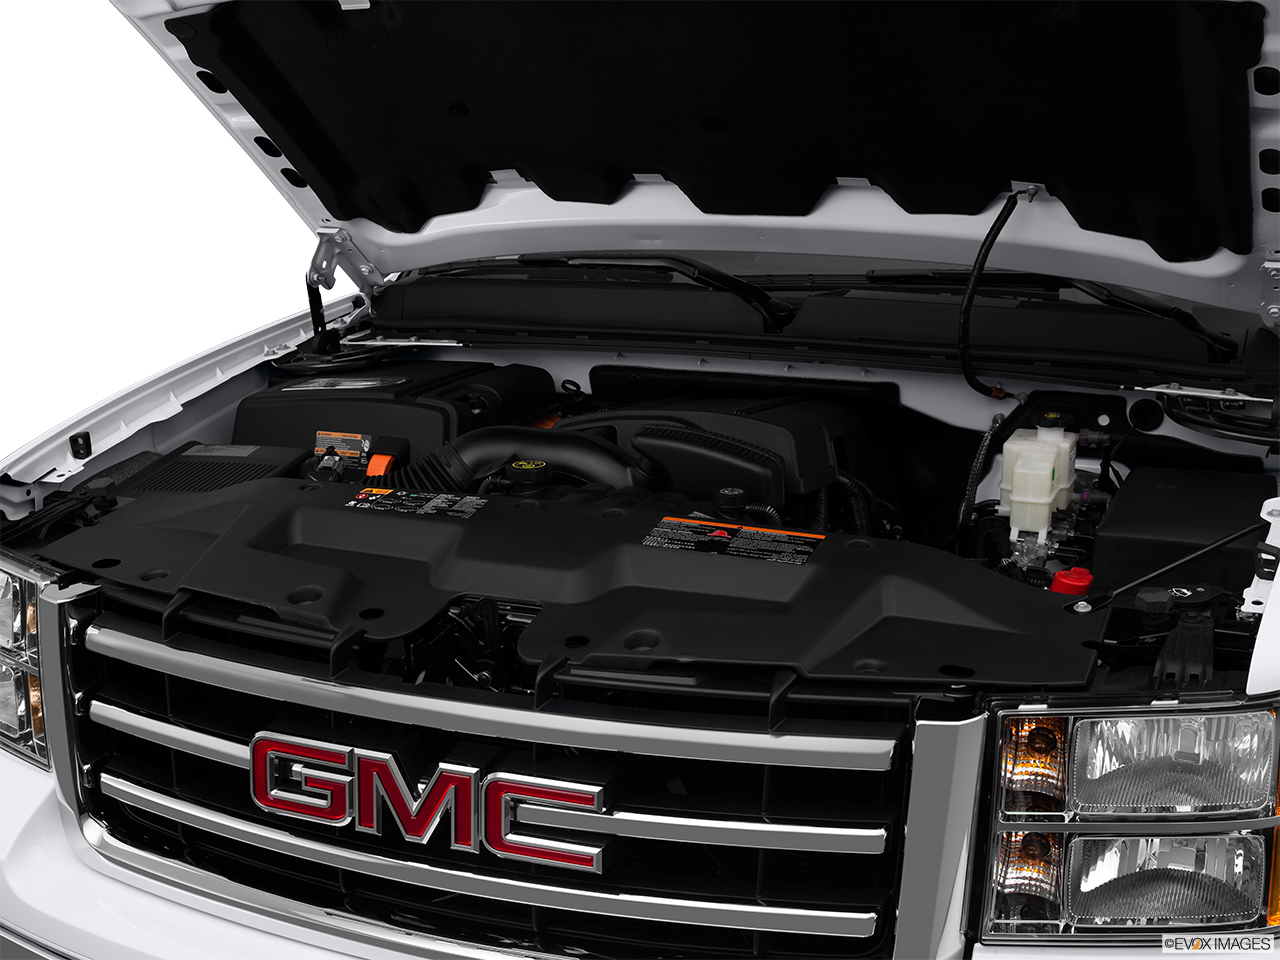 2013 GMC Sierra 1500 Hybrid 3HA Engine. 